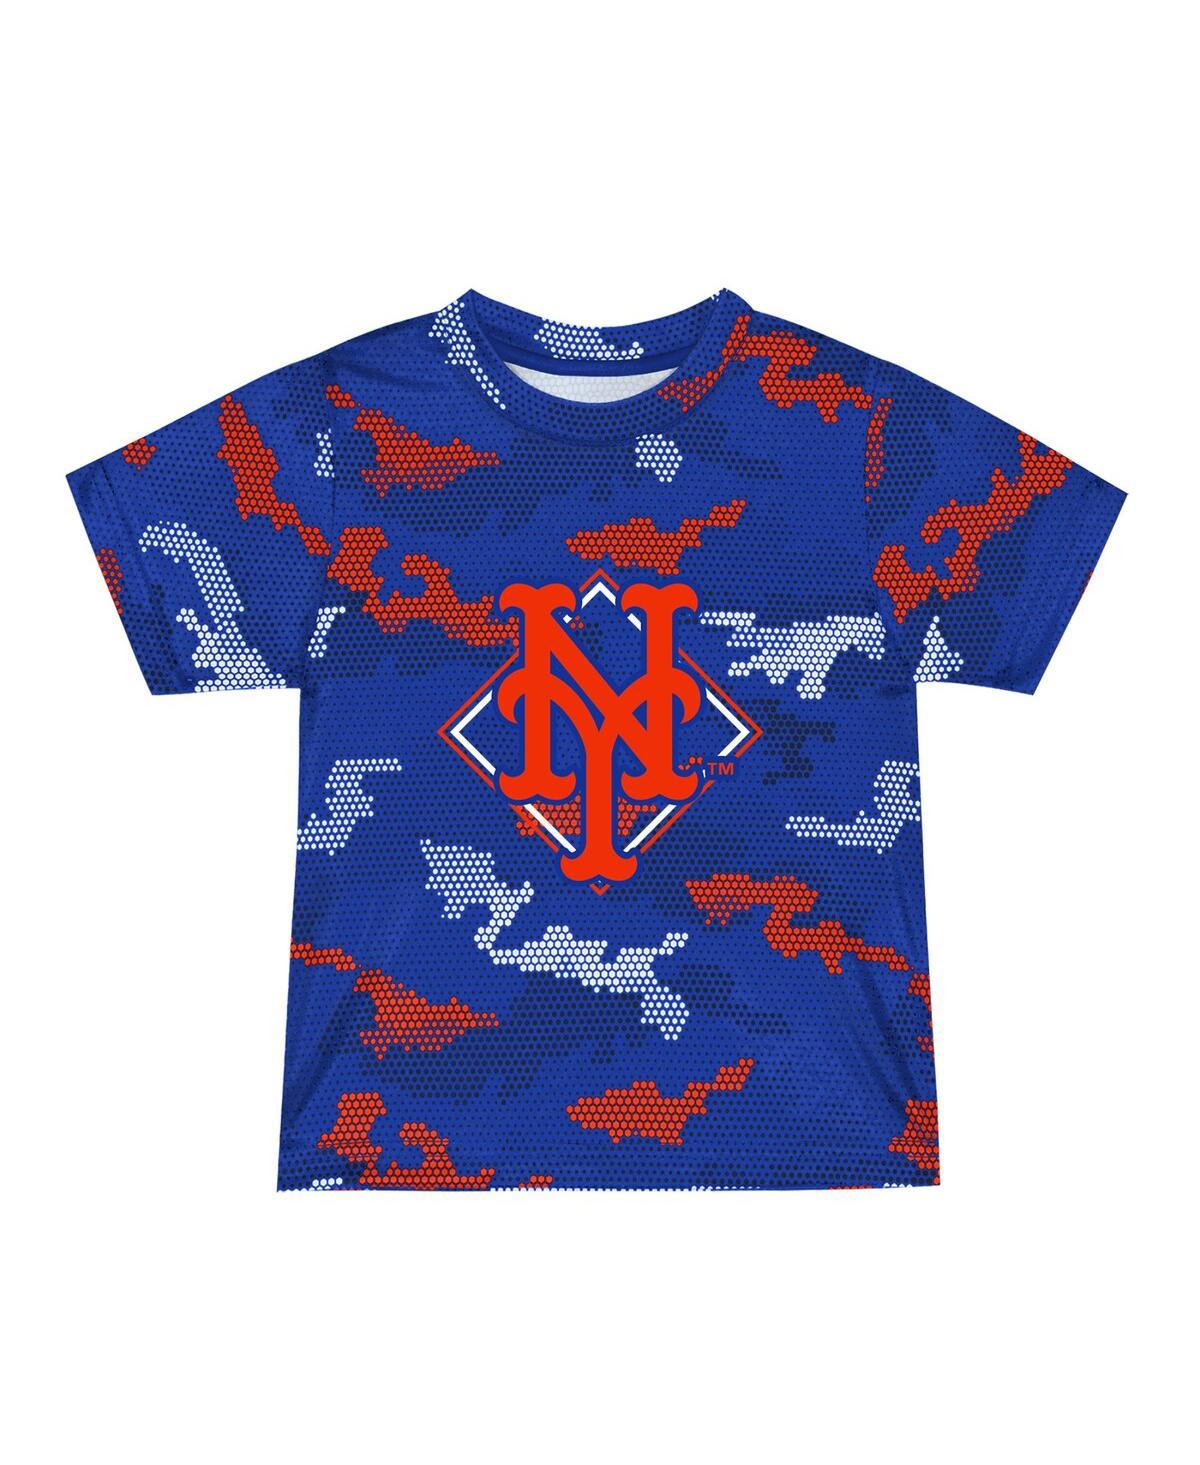 Shop Fanatics Toddler Boys And Girls  Royal New York Mets Field Ball T-shirt And Shorts Set